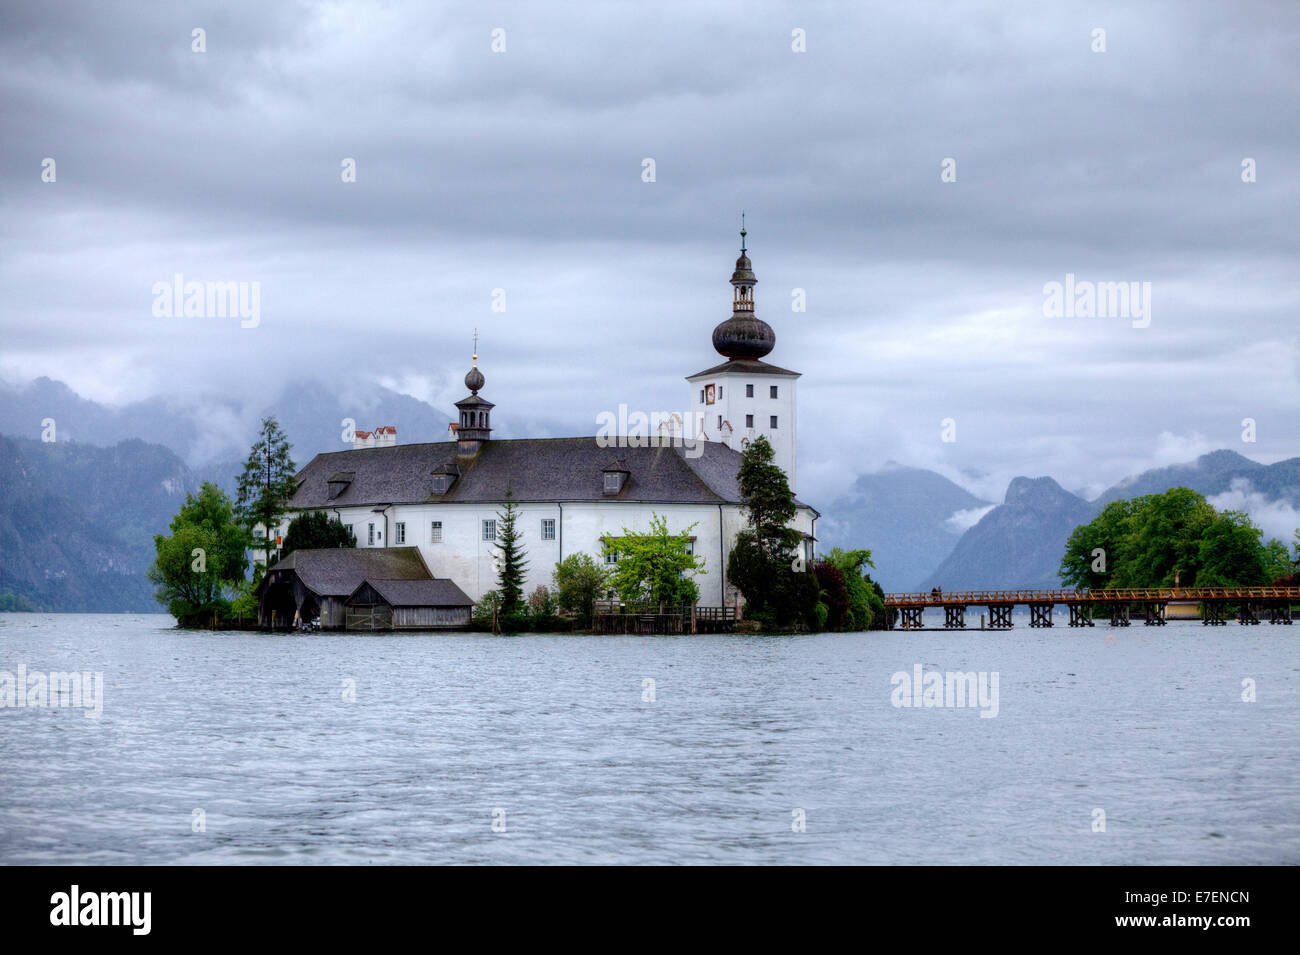 Schloss Ort castle, Lake Traunsee, Gmunden, Austria. Stock Photo